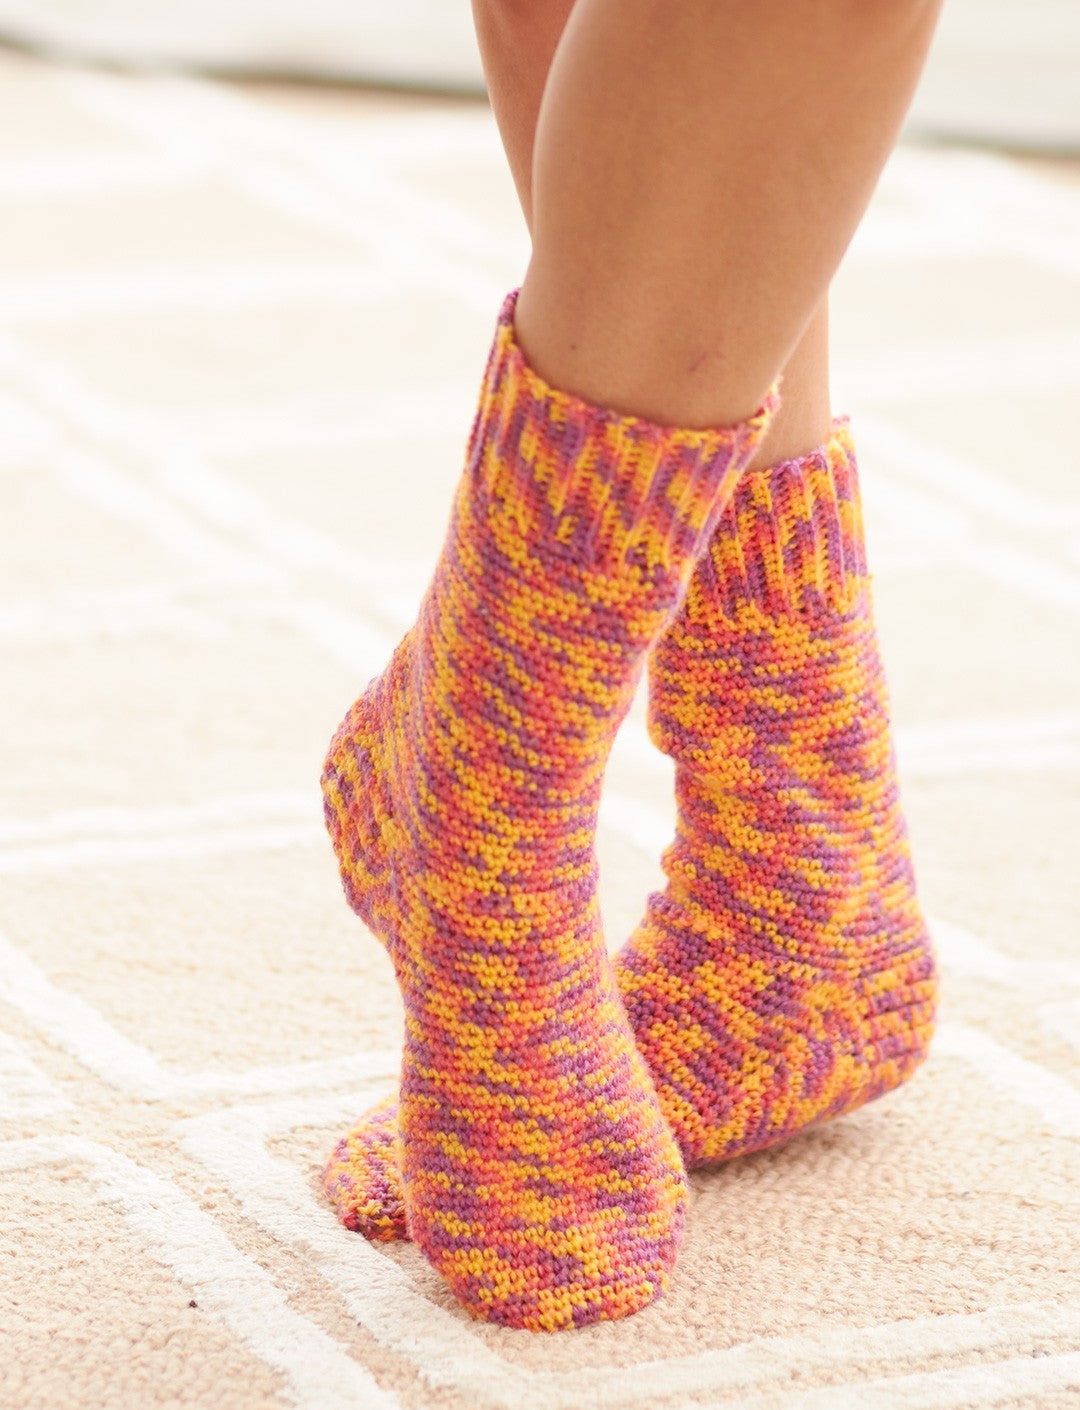 Free Basic Sock Pattern – Mary Maxim Ltd